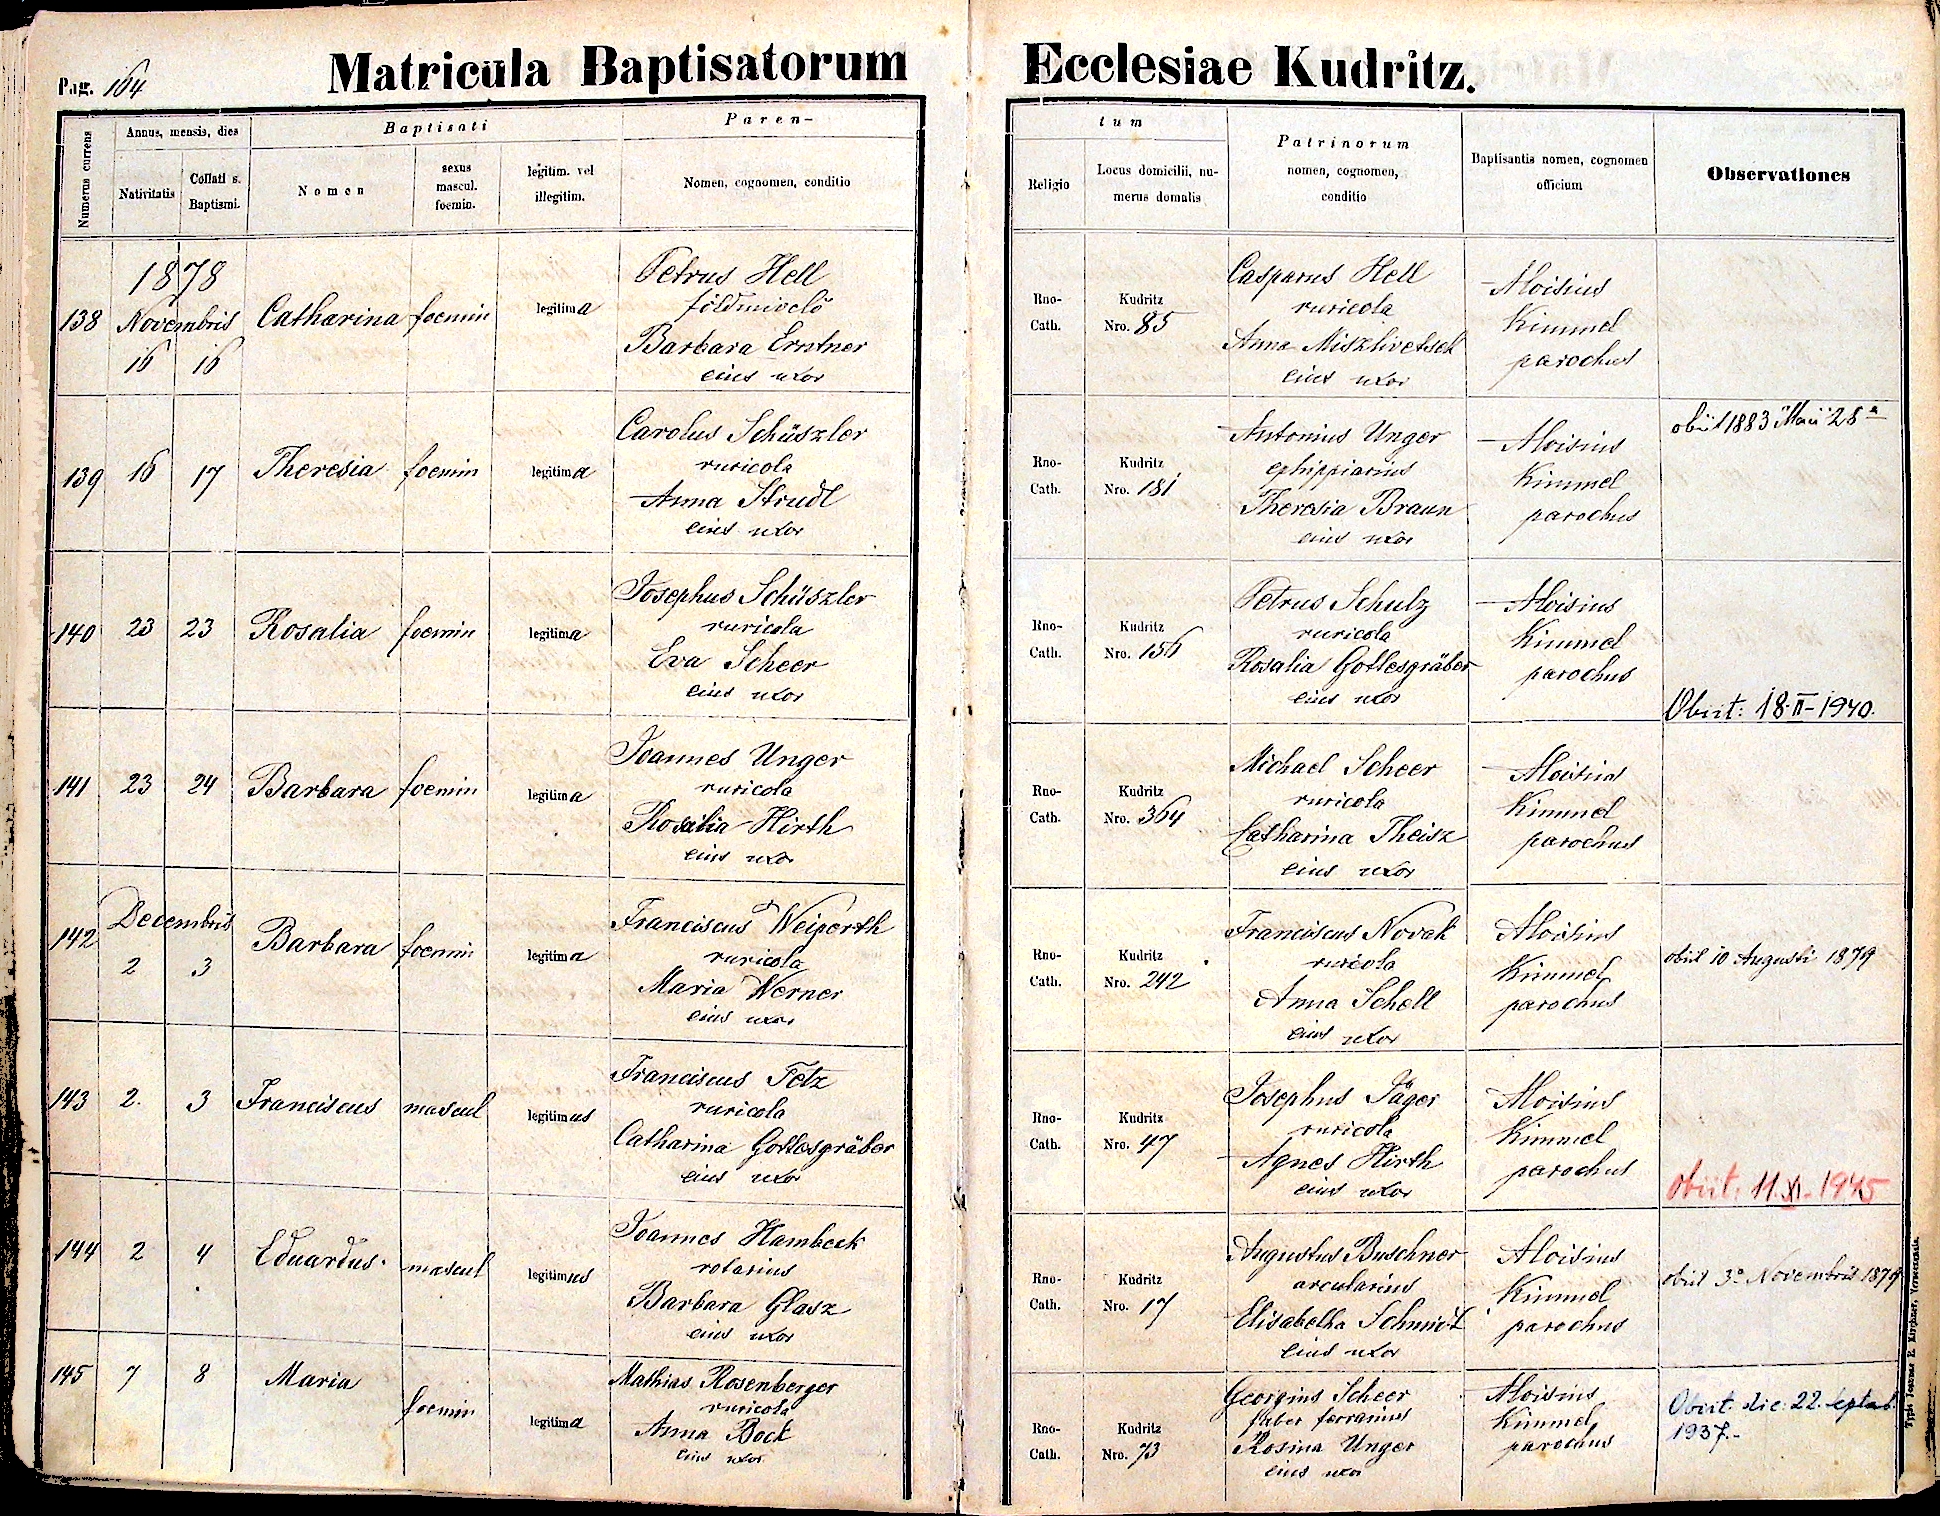 images/church_records/BIRTHS/1870-1879B/1878/164